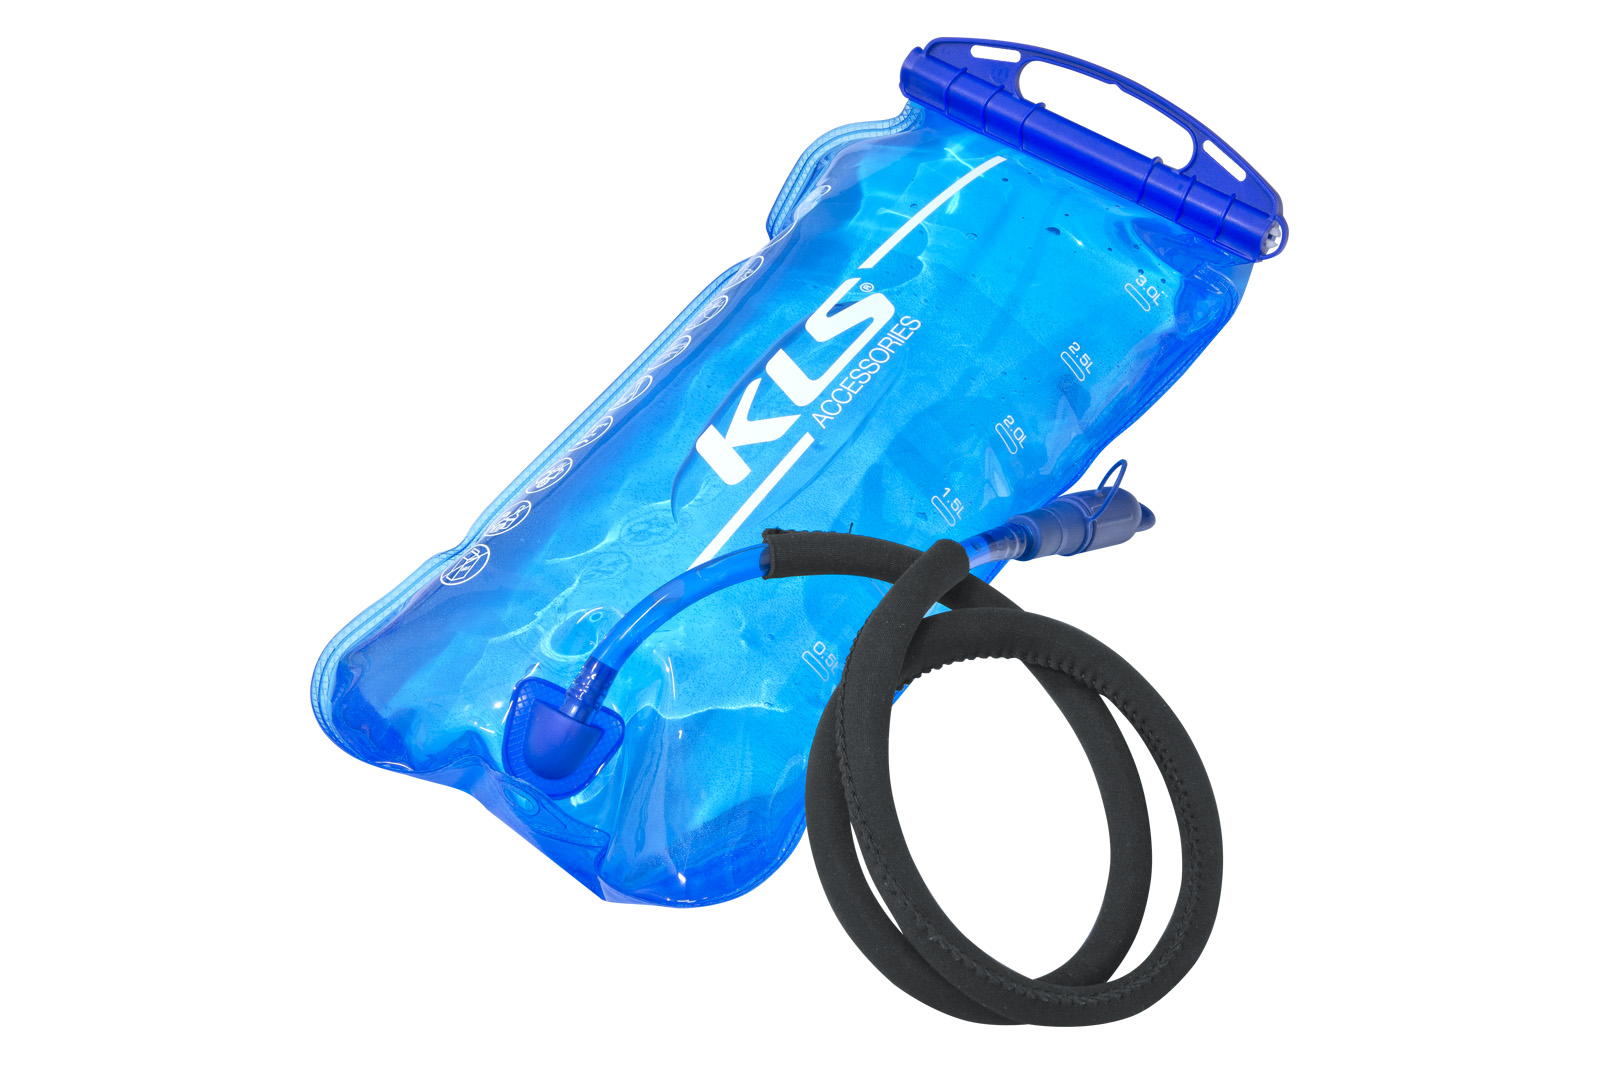 Vodný vak KLS TANK 30 3-litrový